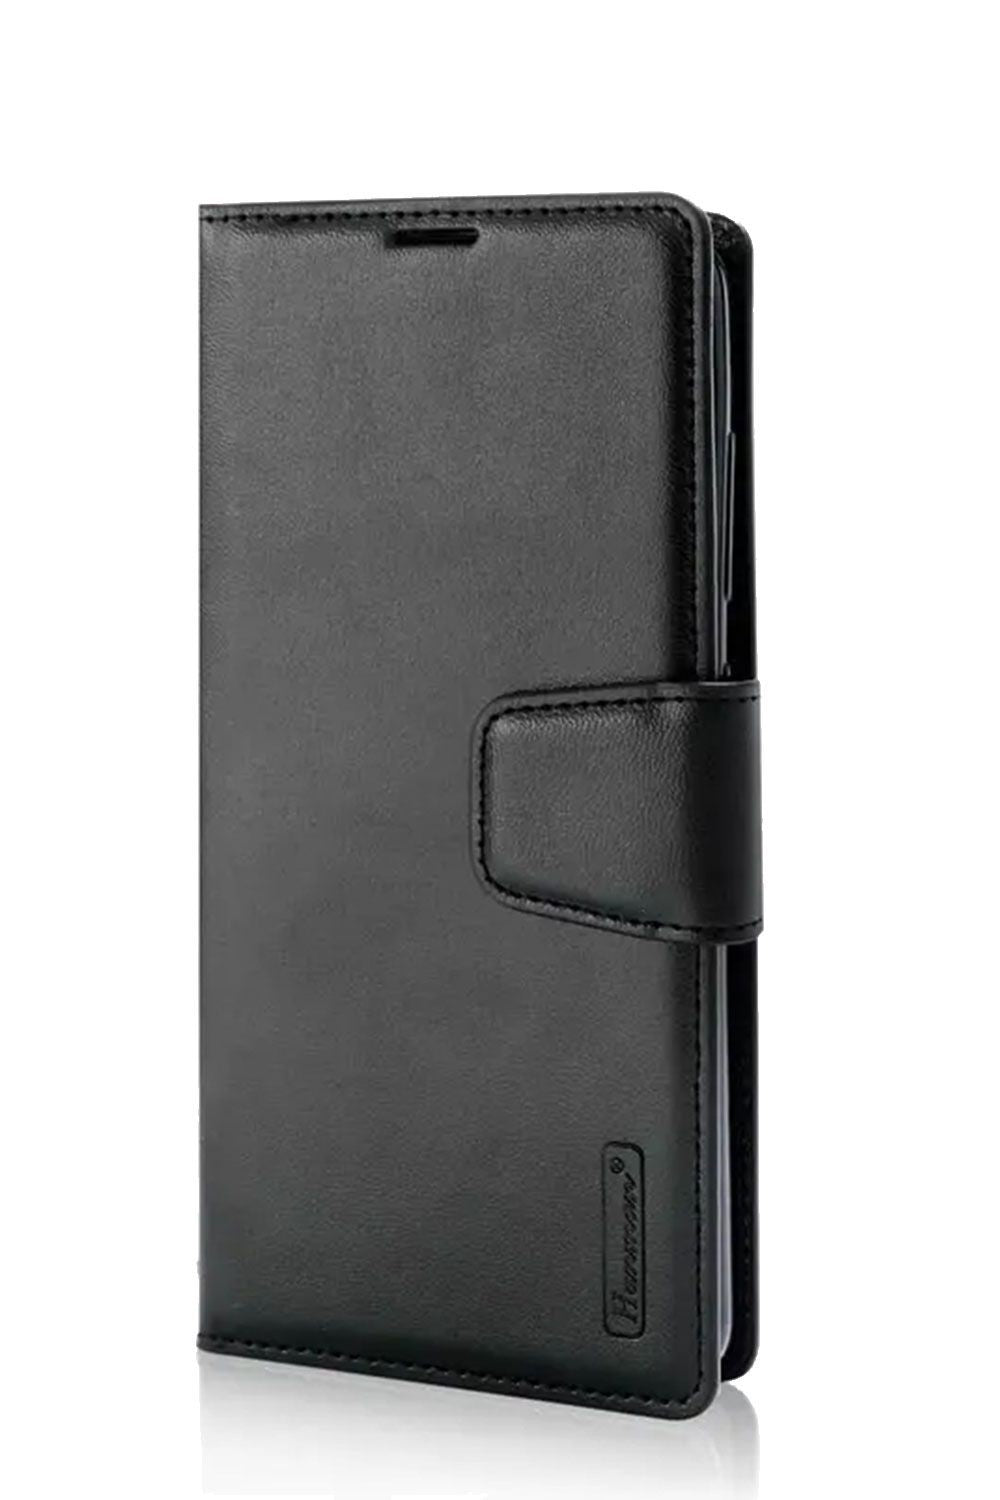 Hanman Samsung Galaxy A54 Premium Leather Wallet Flip Case with Card Slots